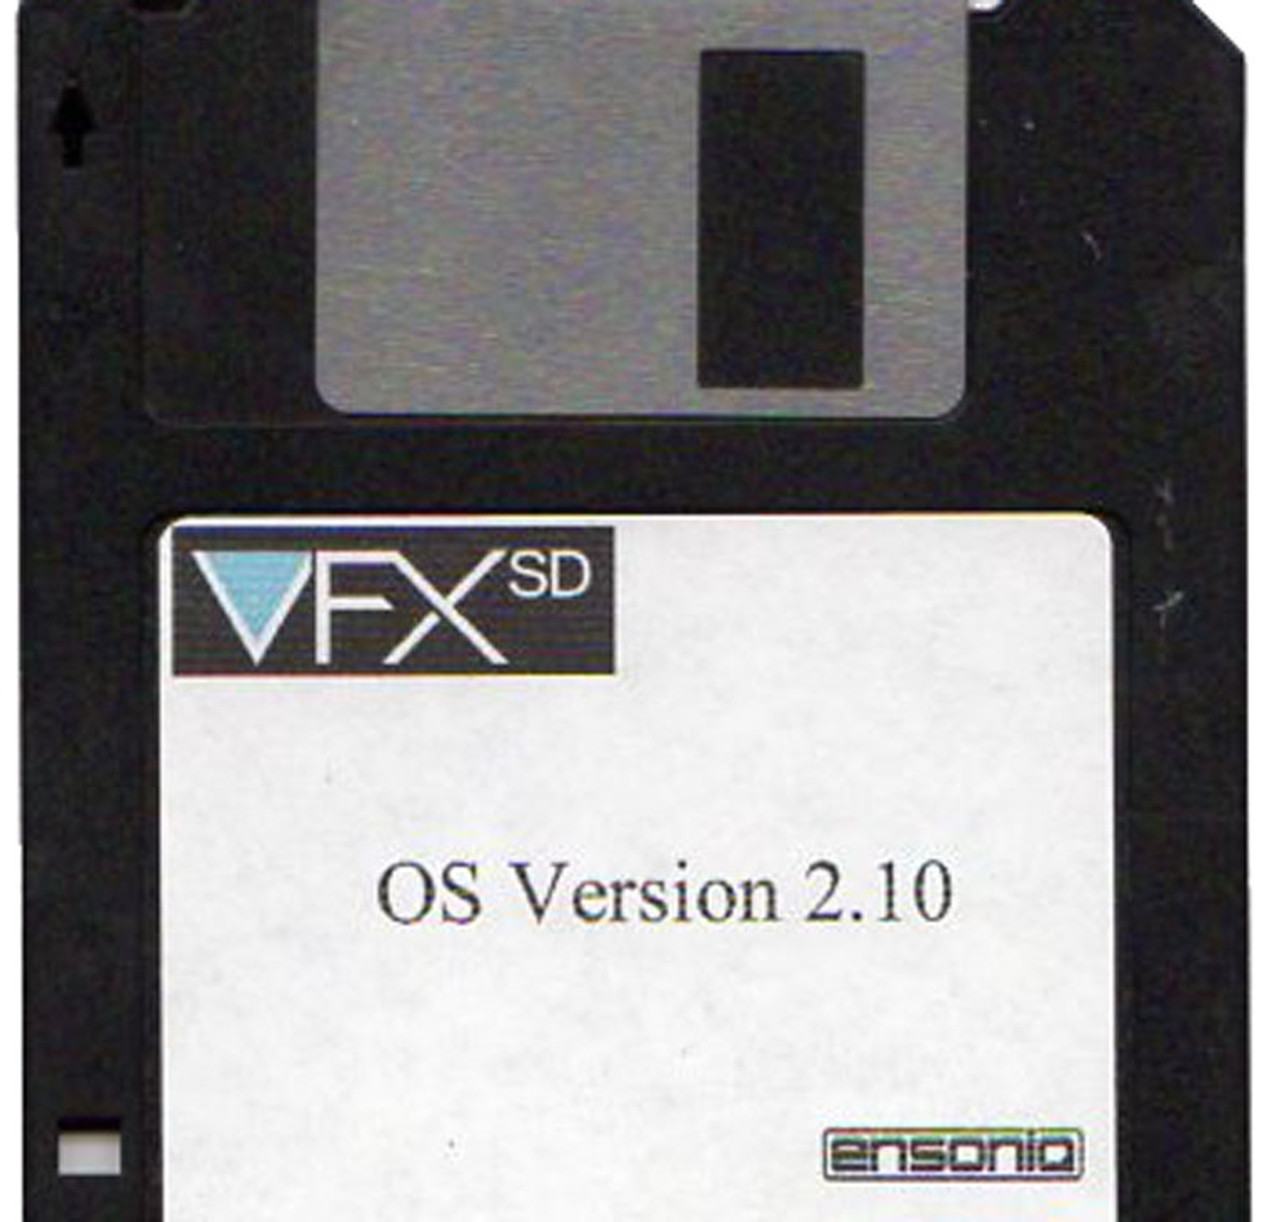 Ensoniq VFXsd Operating System Version 2.10 (Newest)